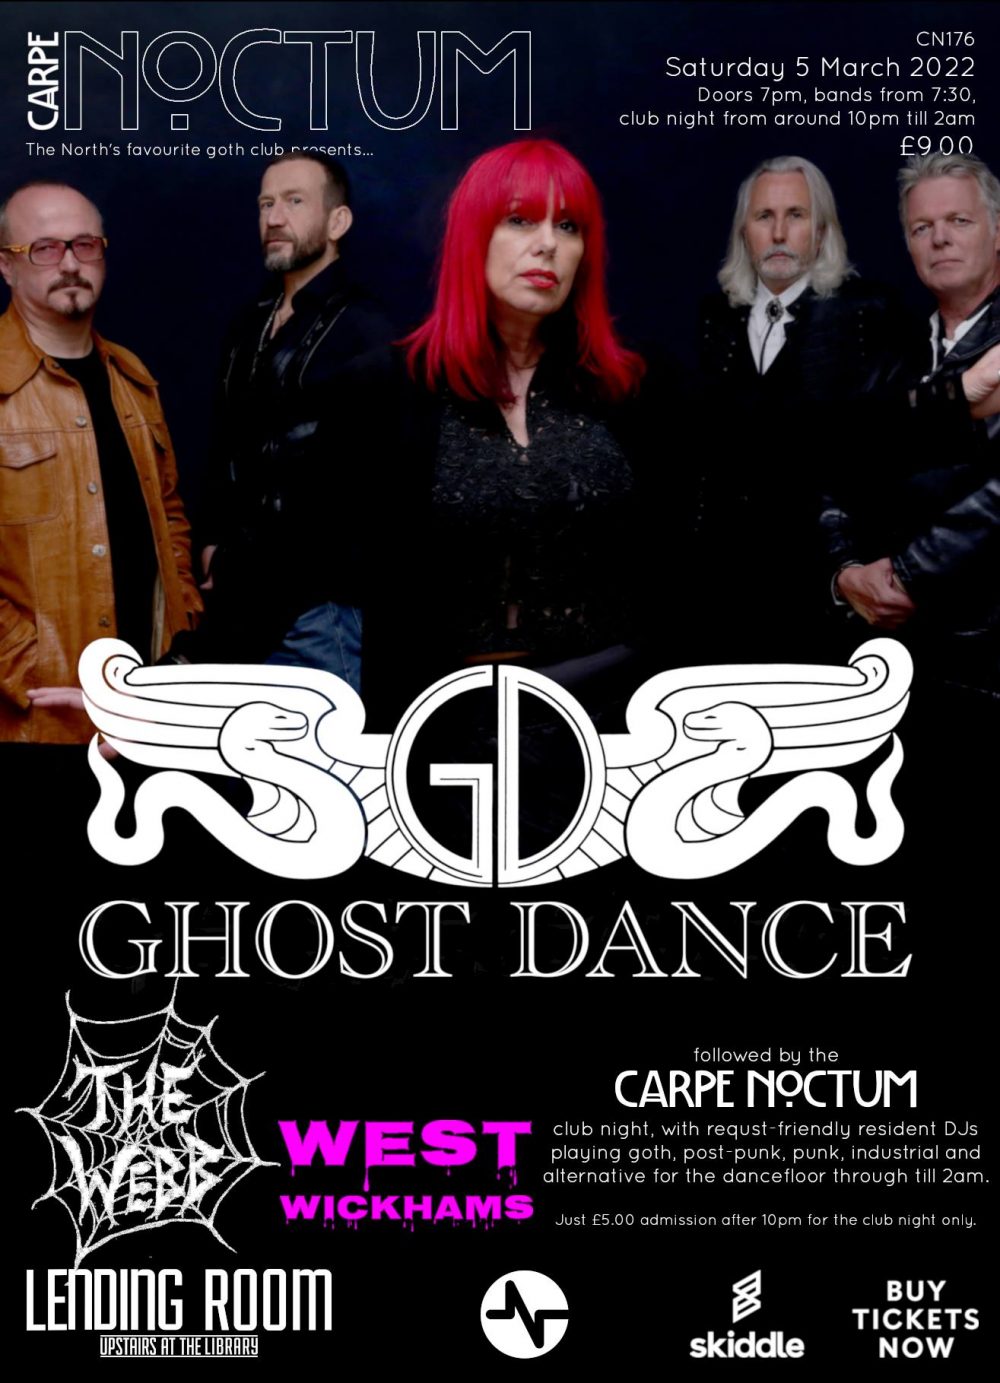 Carpe Noctum: Ghost Dance, The Webb, and West Wickhams